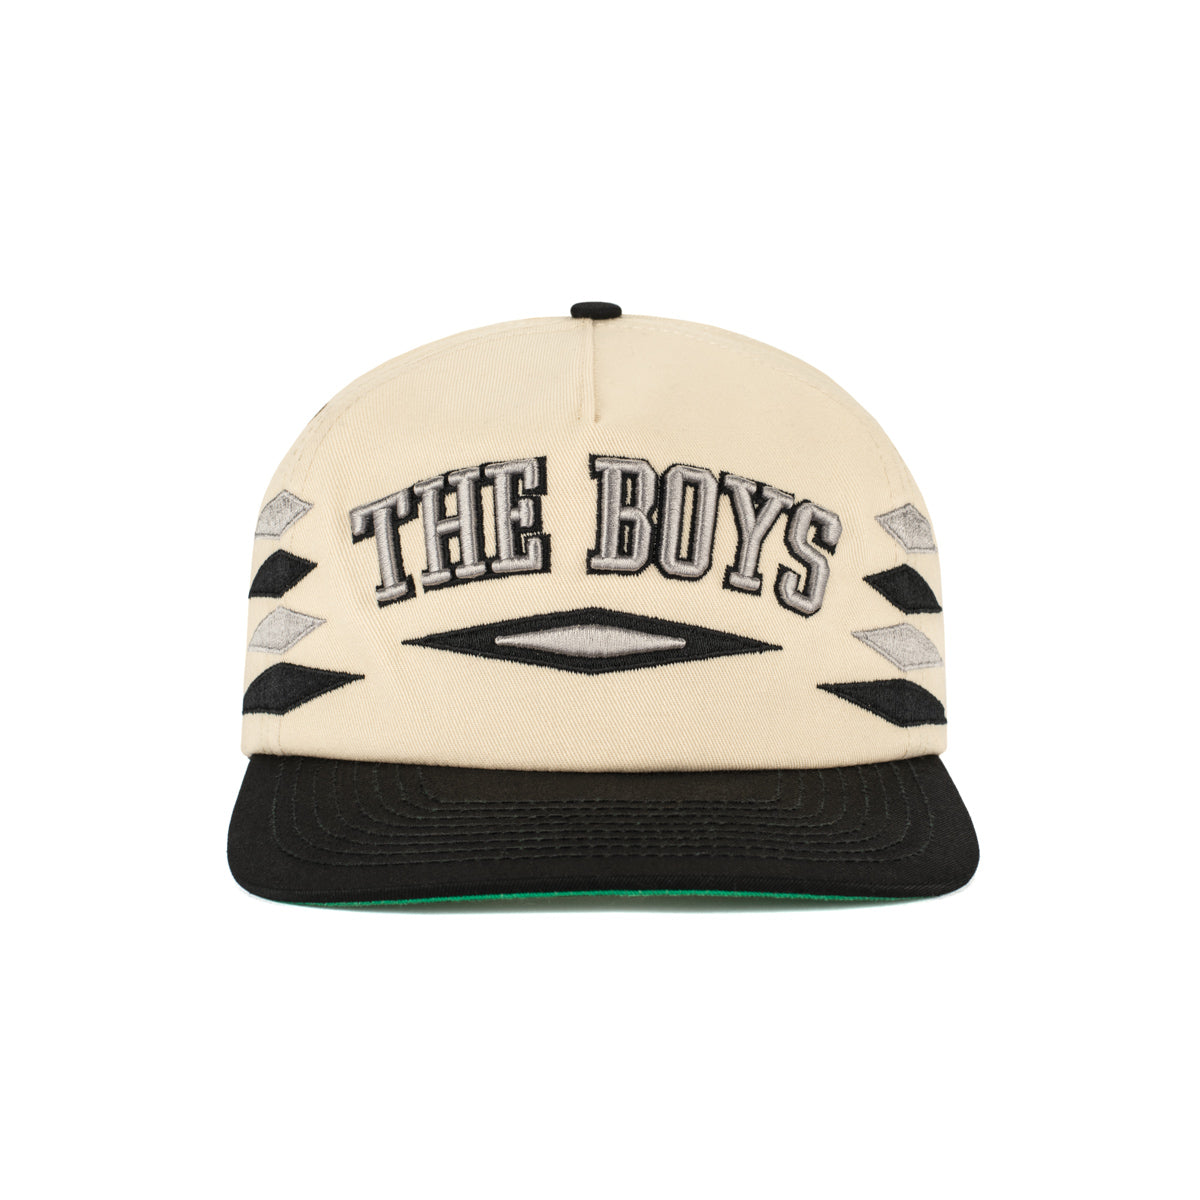 The Boys Diamond Retro Hat-Hats-Bussin With The Boys-Tan/Black-OS-Barstool Sports